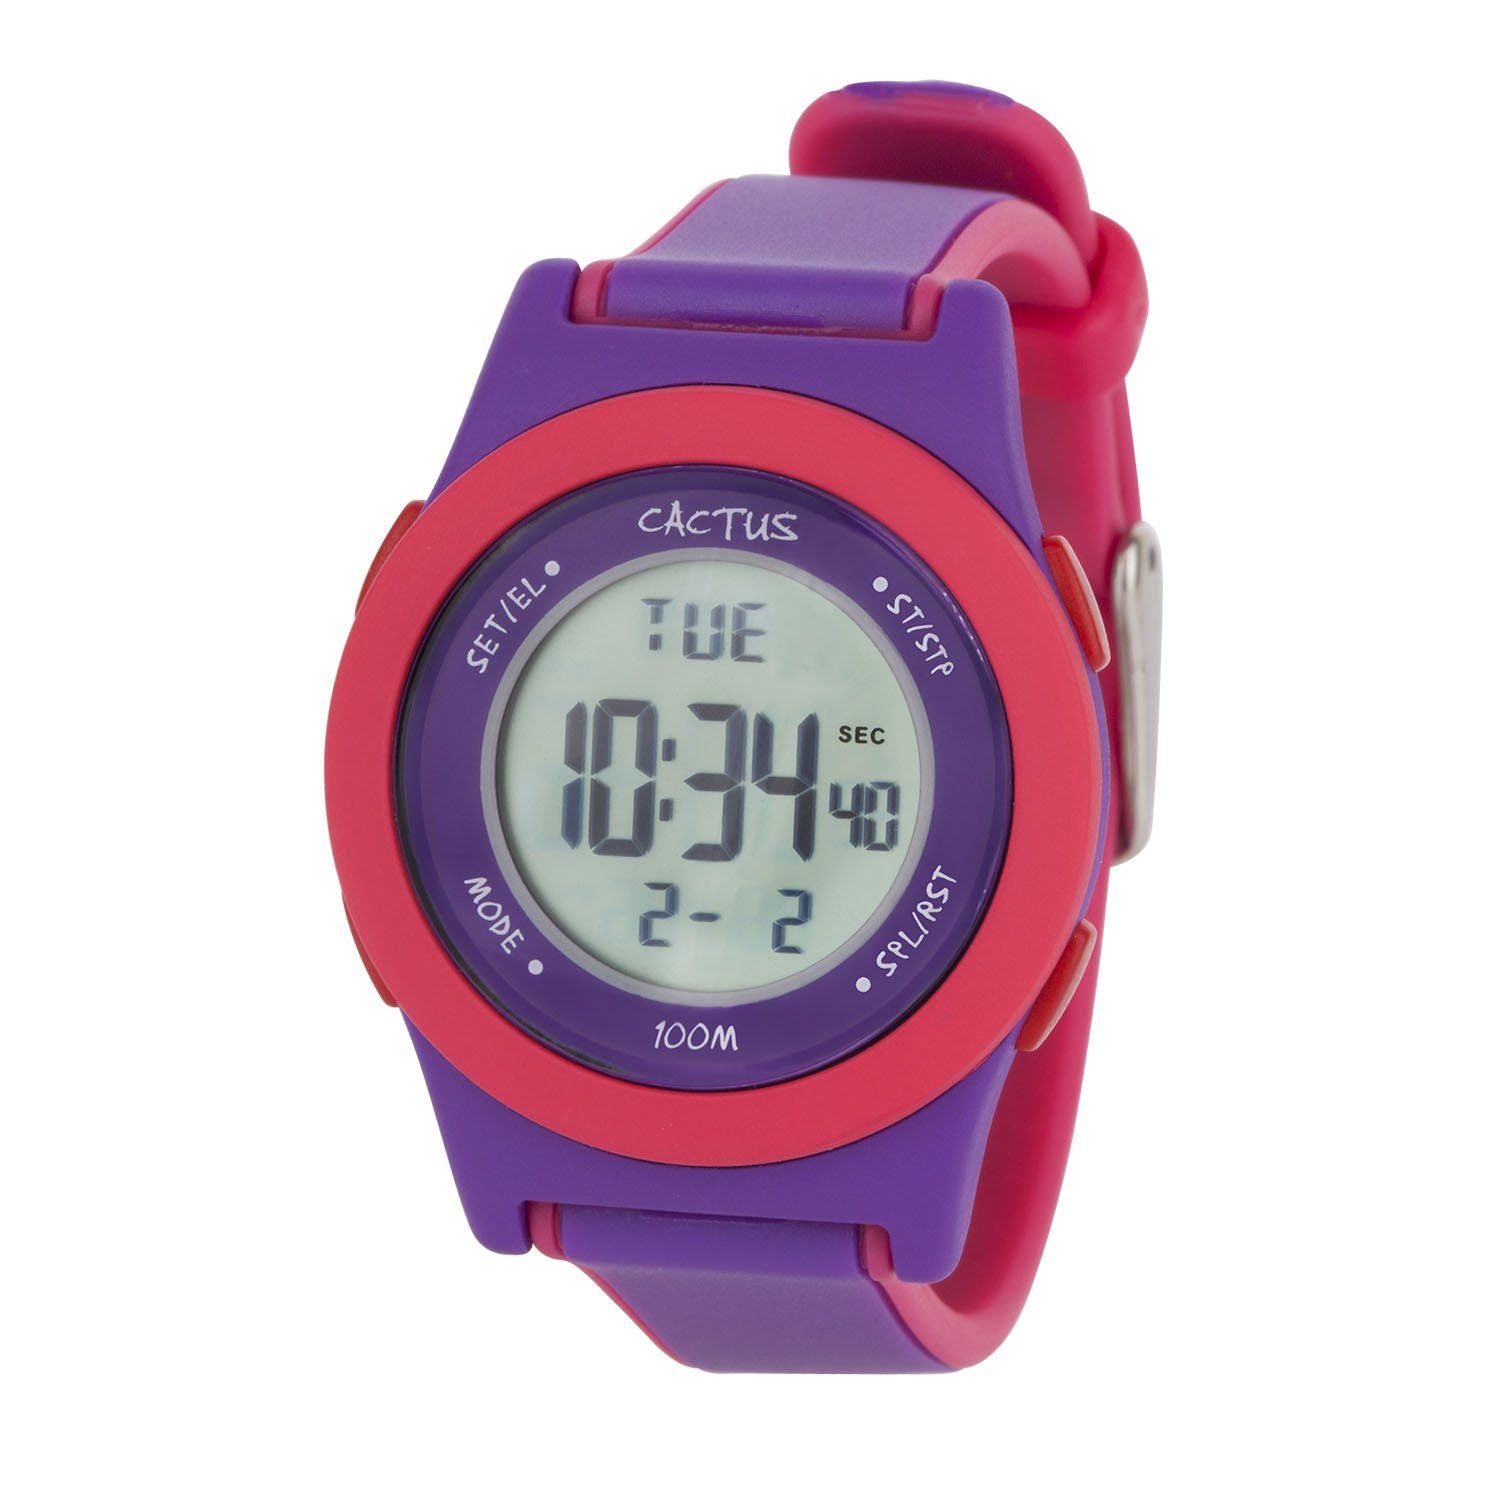 CACTUS Watches -Shine - Digital Kids Watch - Purple/Pink - CAC-125-M09